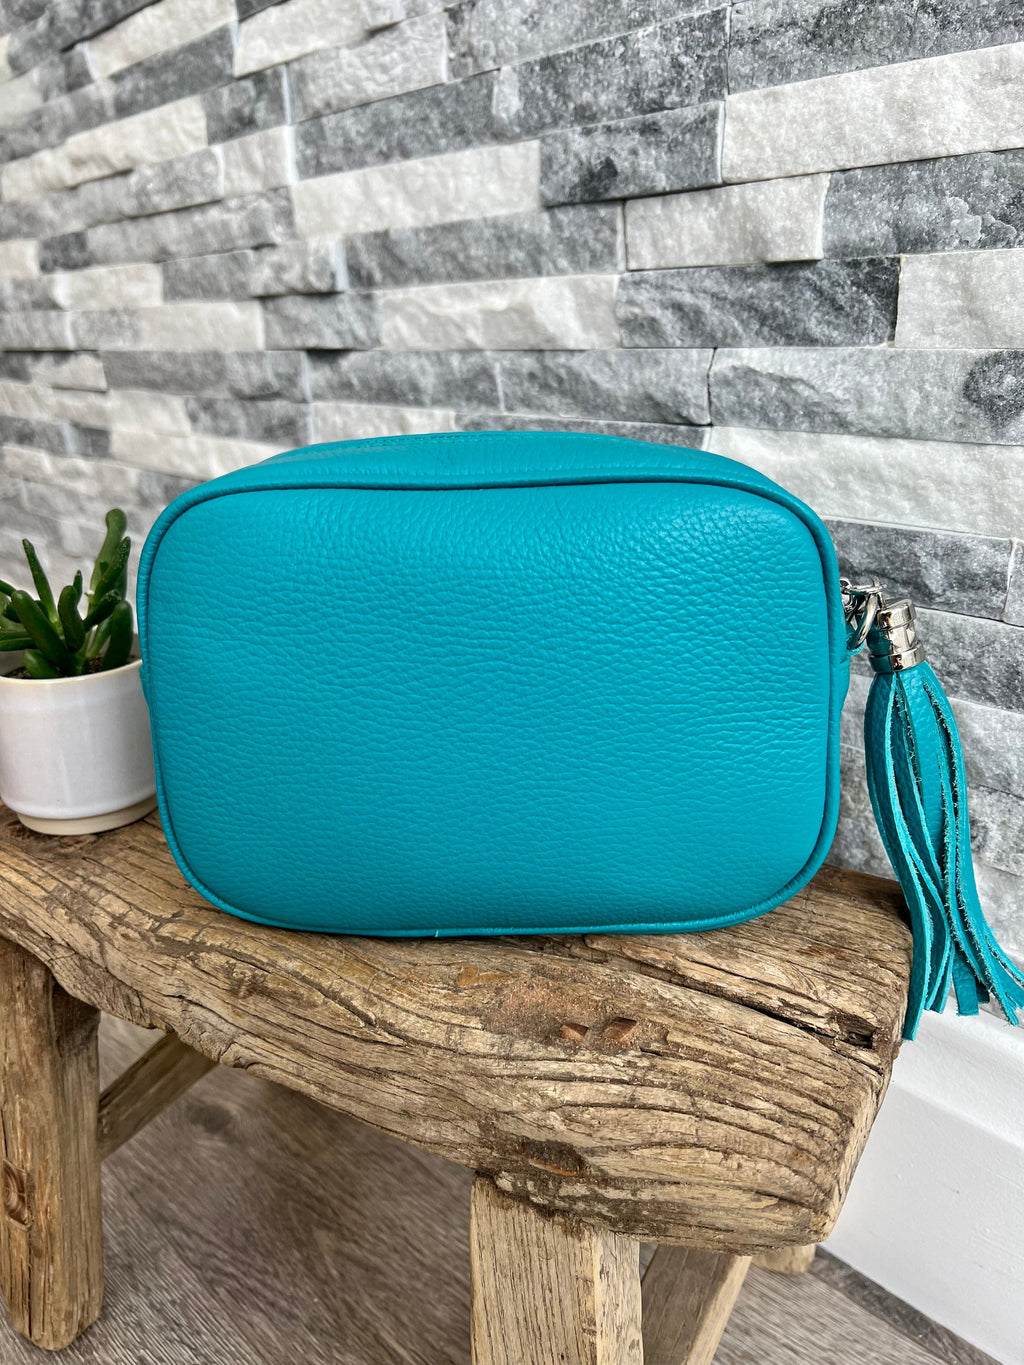 lusciousscarves Handbags Turquoise Leather Camera Style Bag